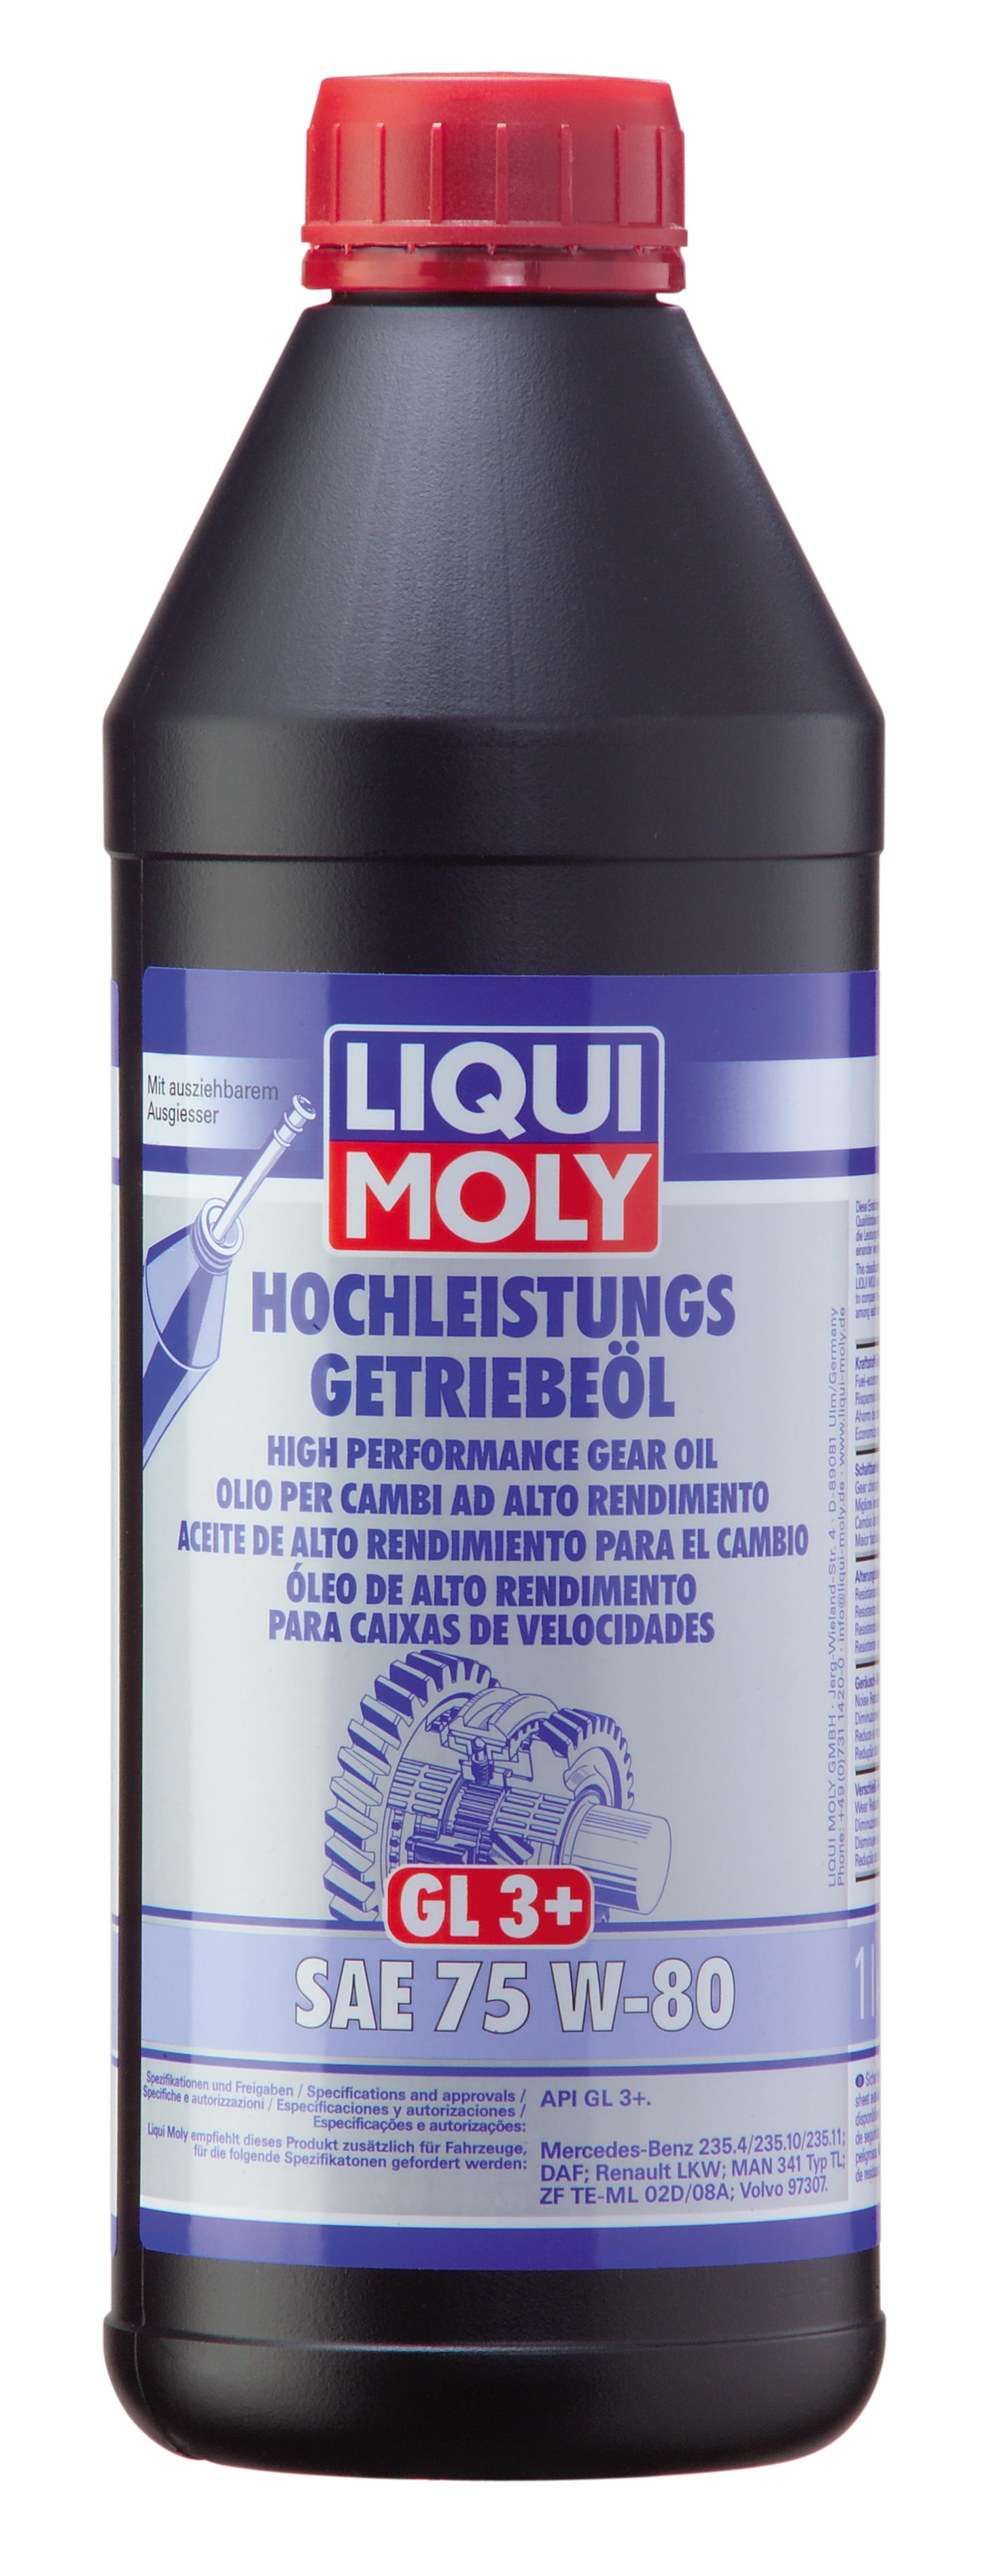 75w-80 Hochleistungs-Getriebeoil gl3+, 1л (НС-синт.транс.масло) - Liqui Moly 4427